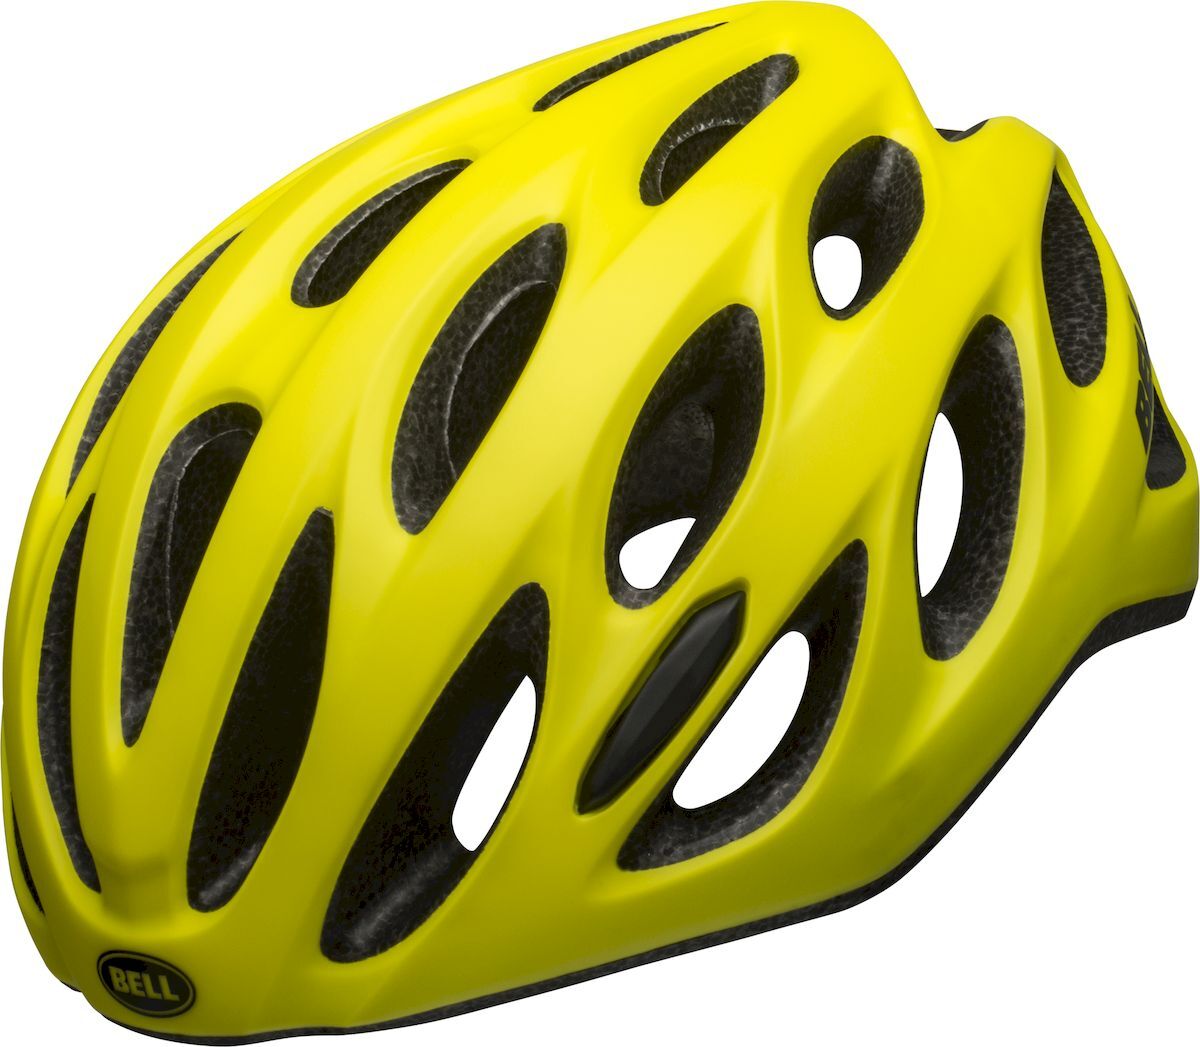 Bell Helmets Tracker R - Road bike helmet